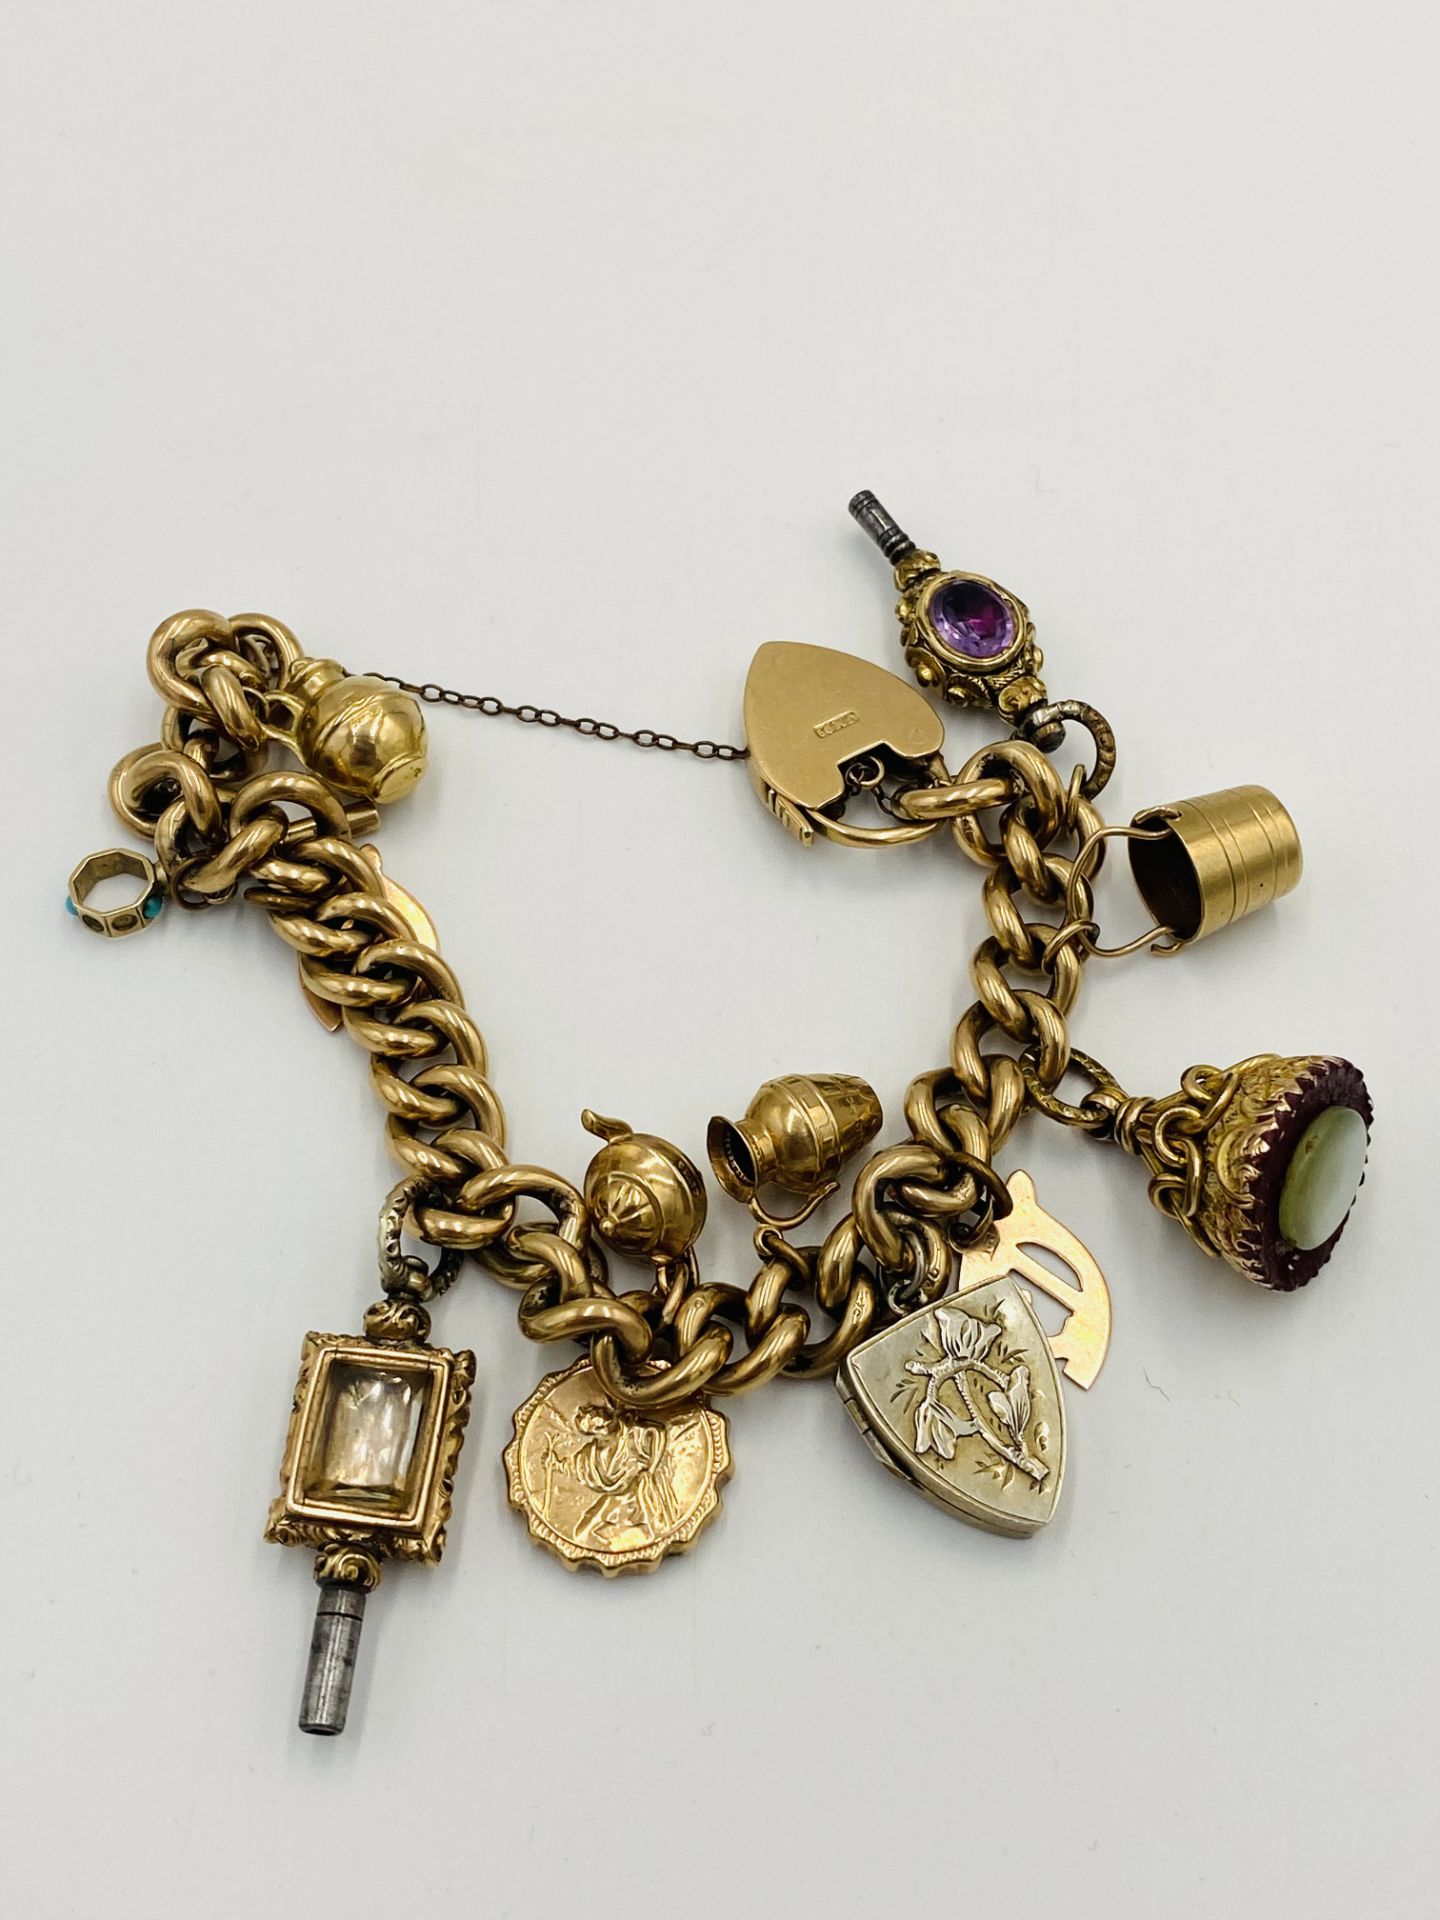 9ct gold charm bracelet - Image 2 of 4